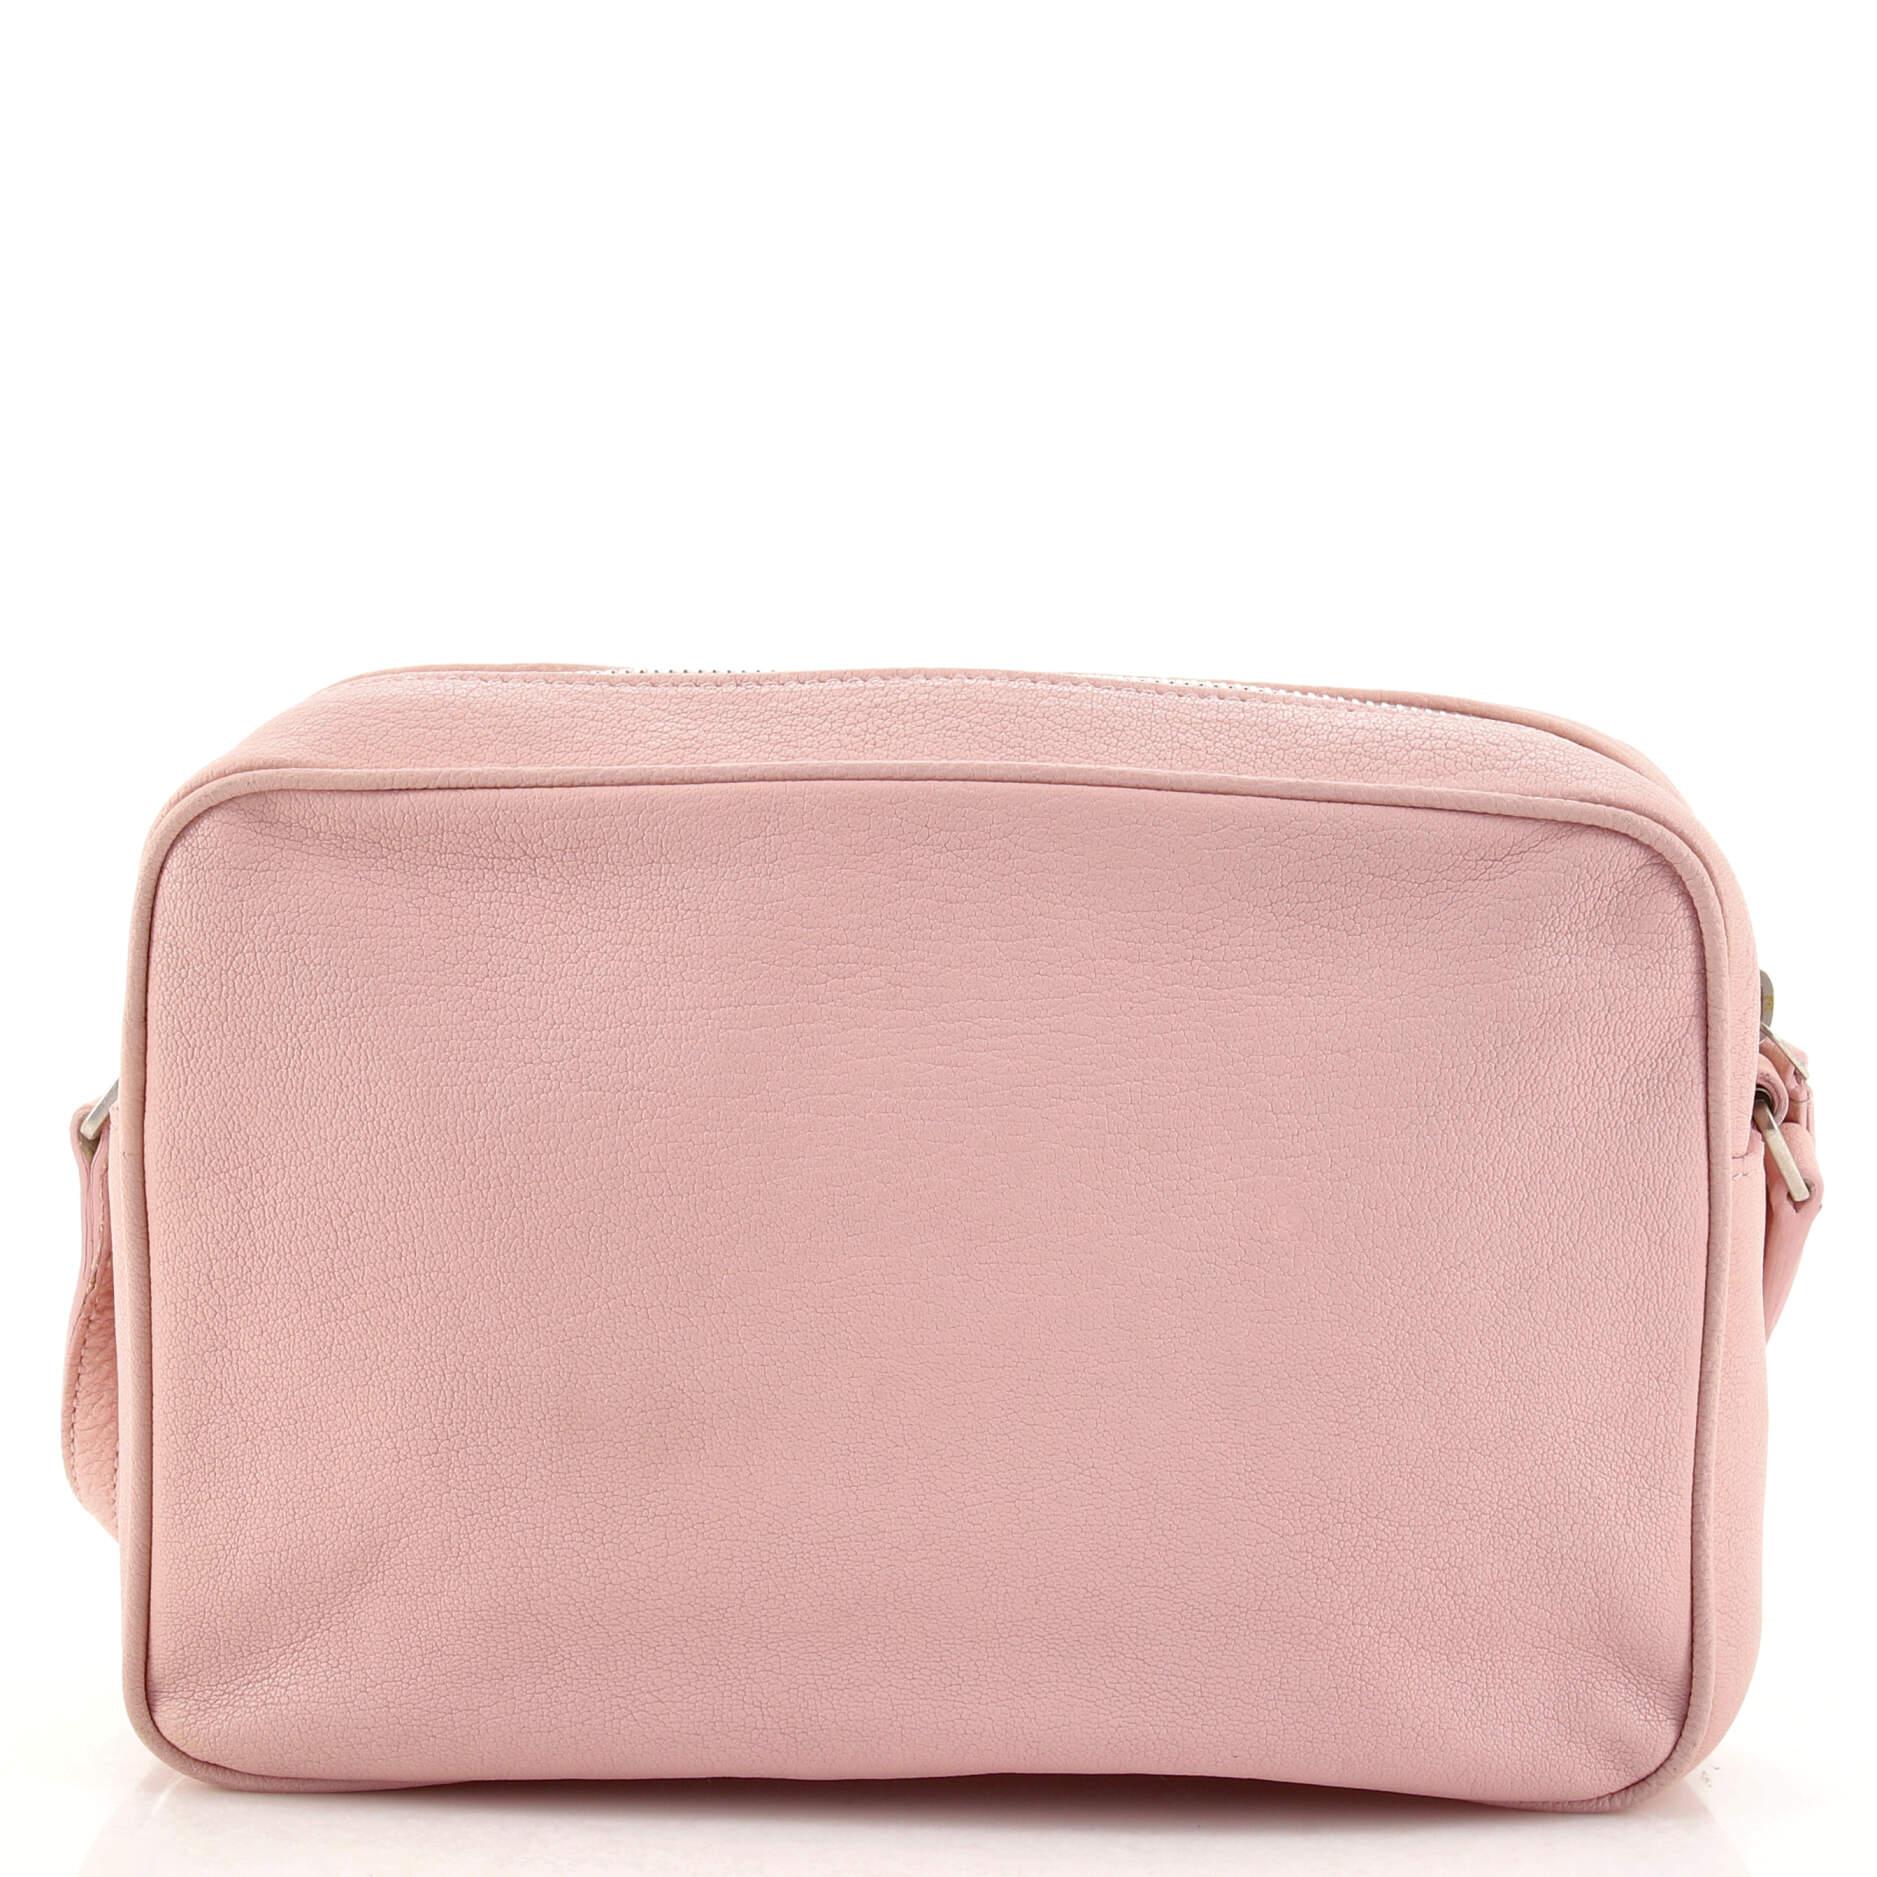 ysl pink camera bag